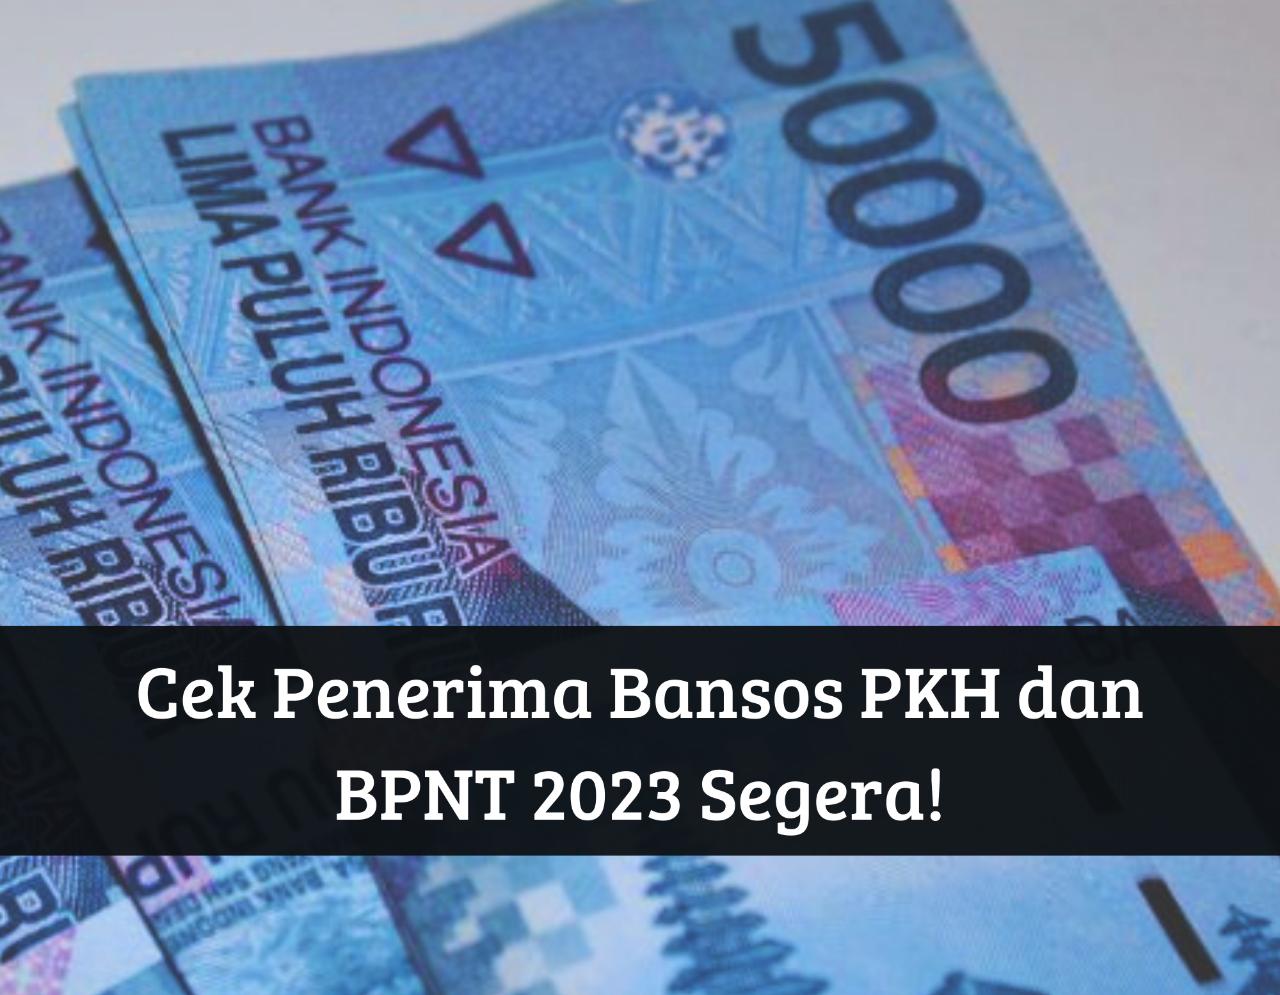 Cair Akhir Agustus! Cek Penerima Bansos PKH dan BPNT 2023 Segera, Dapat Bantuan hingga Rp3.000.000